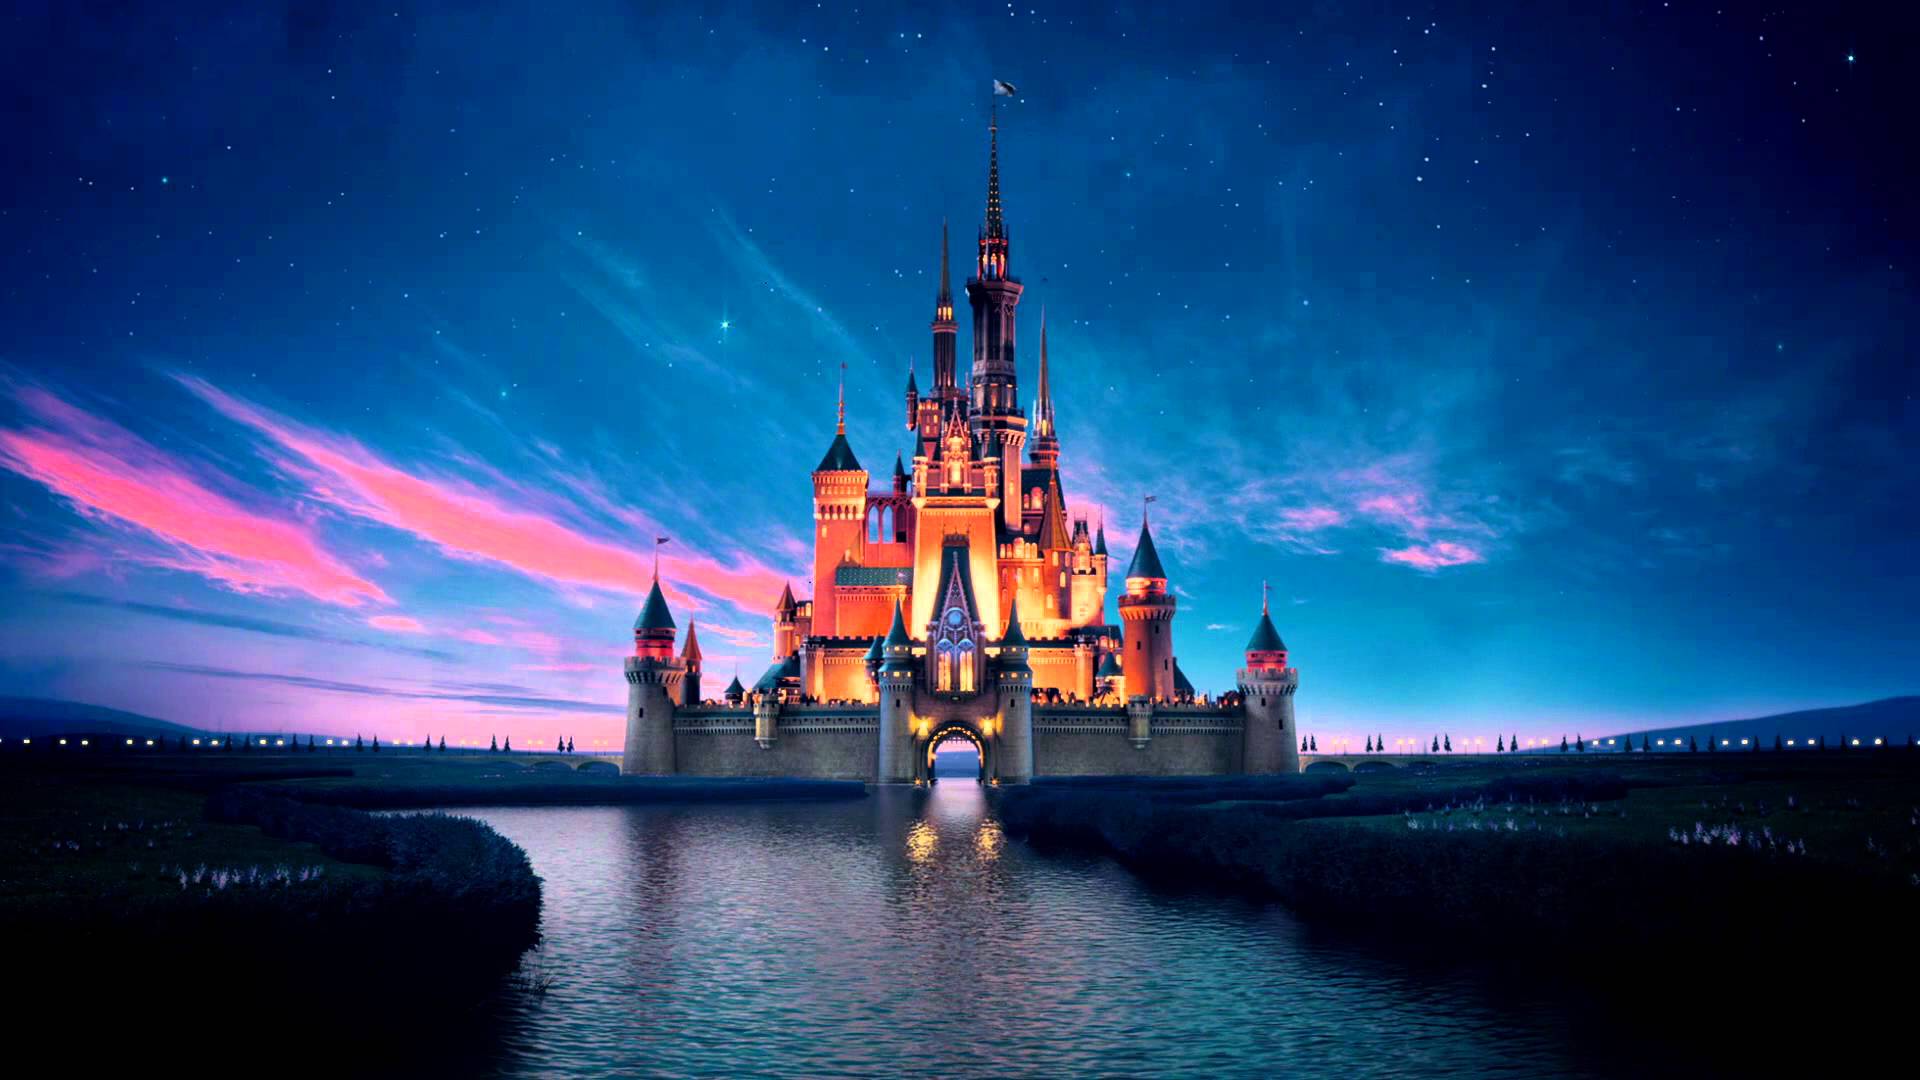 Walt Disney Studios: The Castle (2012)